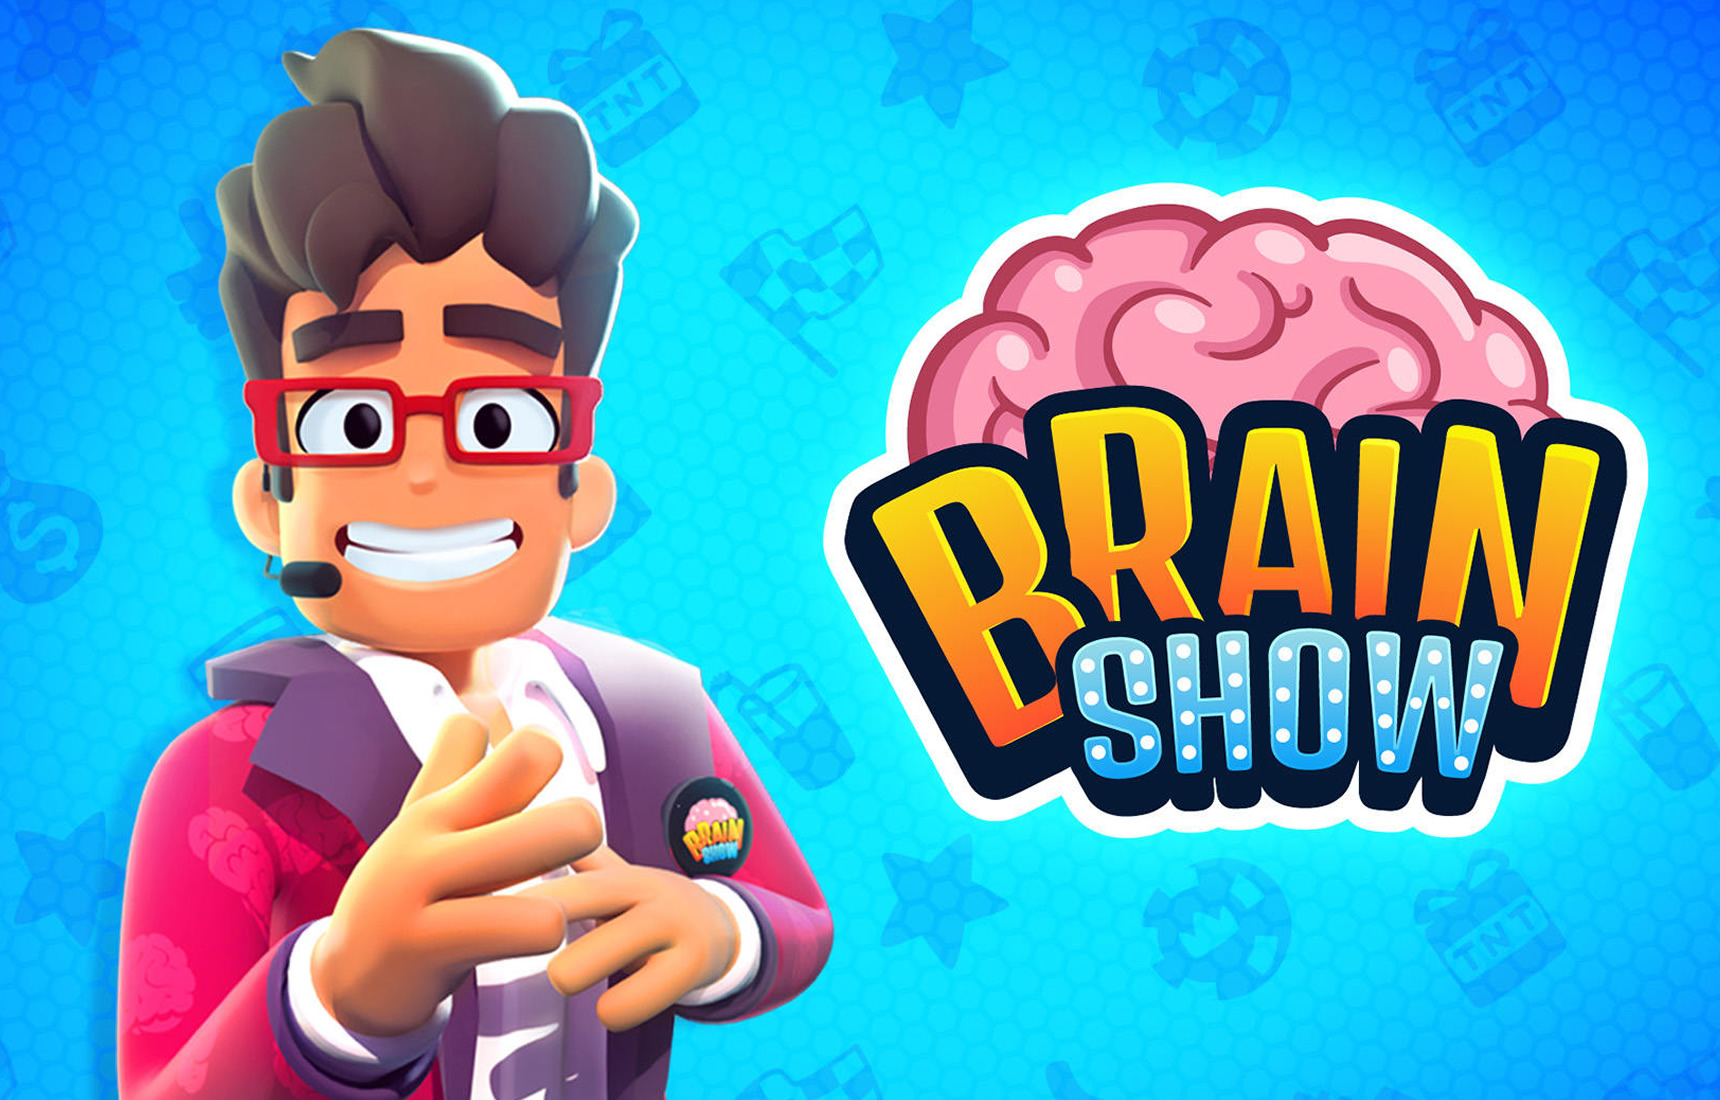 Brain Show gra